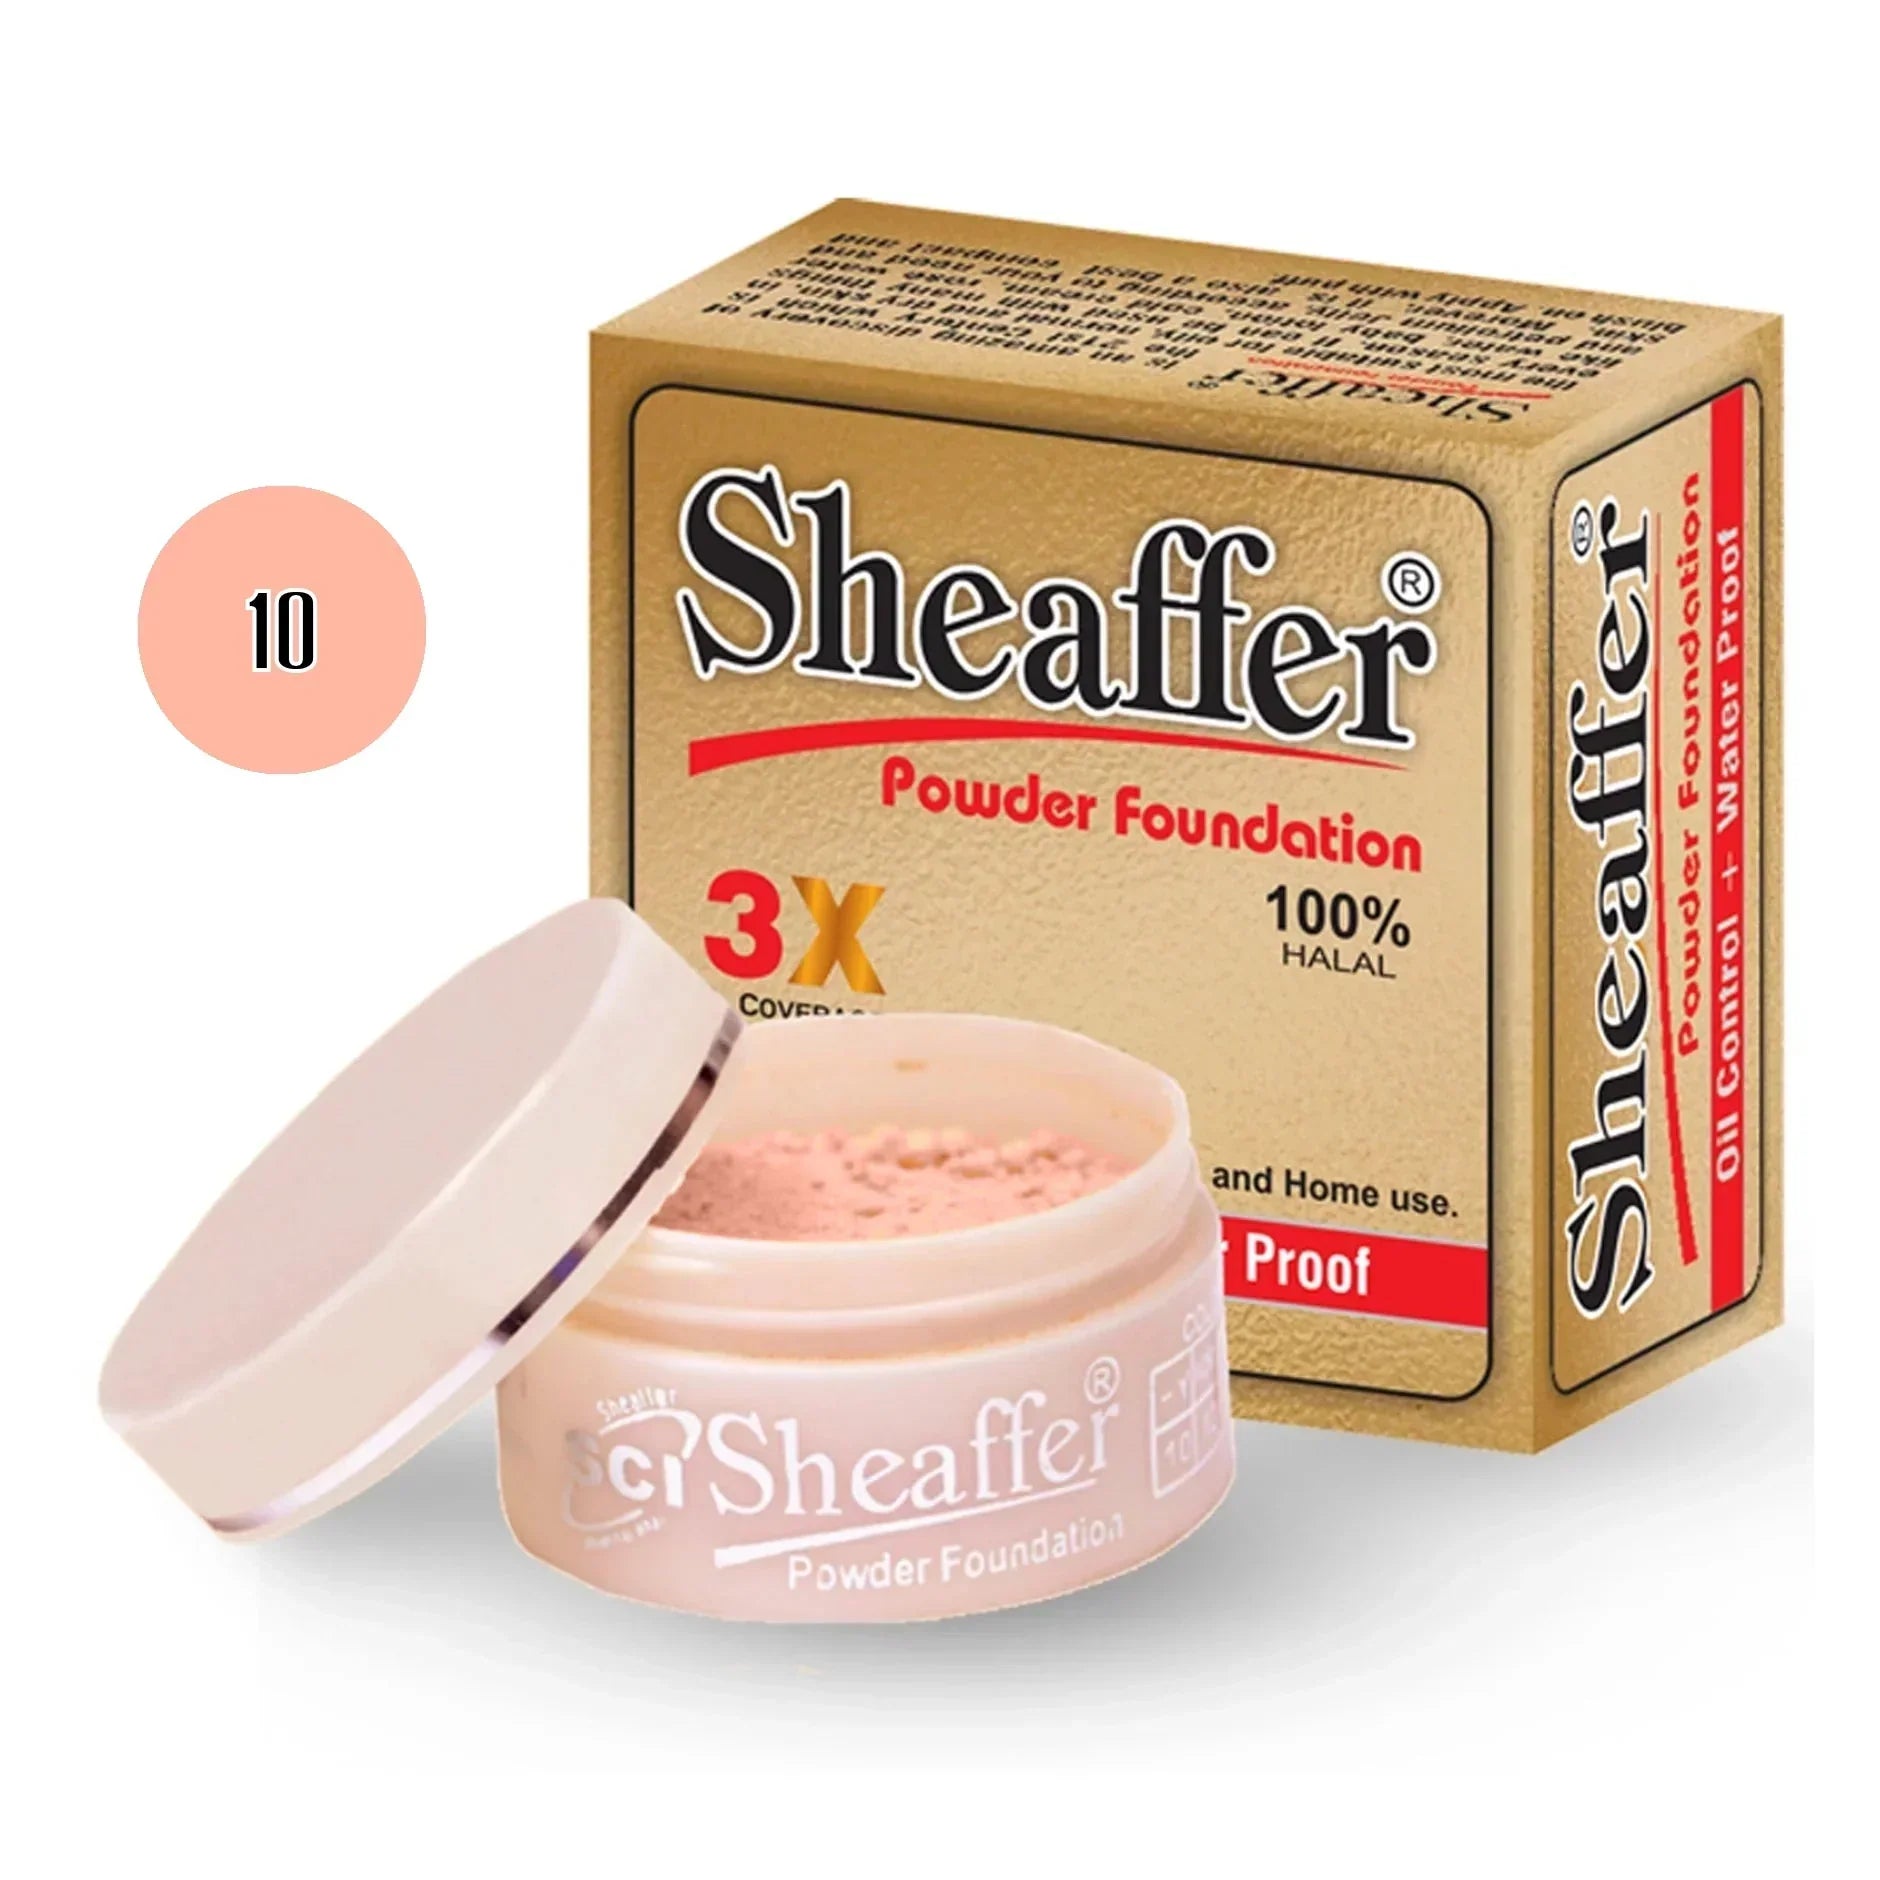 Sheaffer Powder Foundation Base P3 Shade - Retailershop - Online Shopping Center